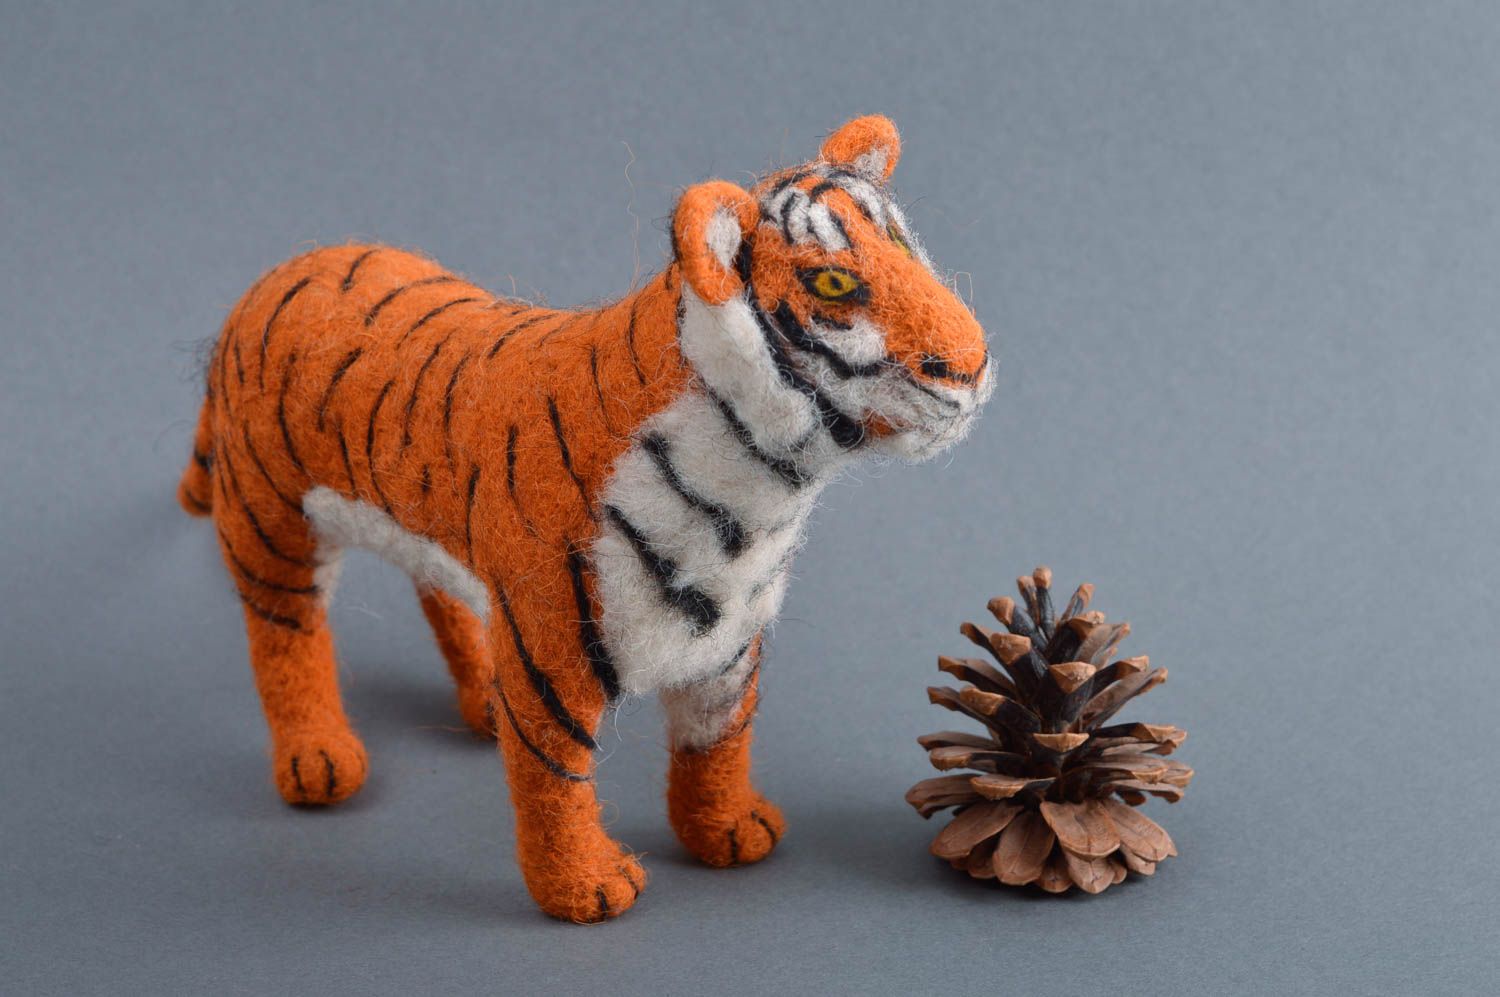 Handmade toy designer toy woolen animal toy for kids nursery decor gift ideas photo 1